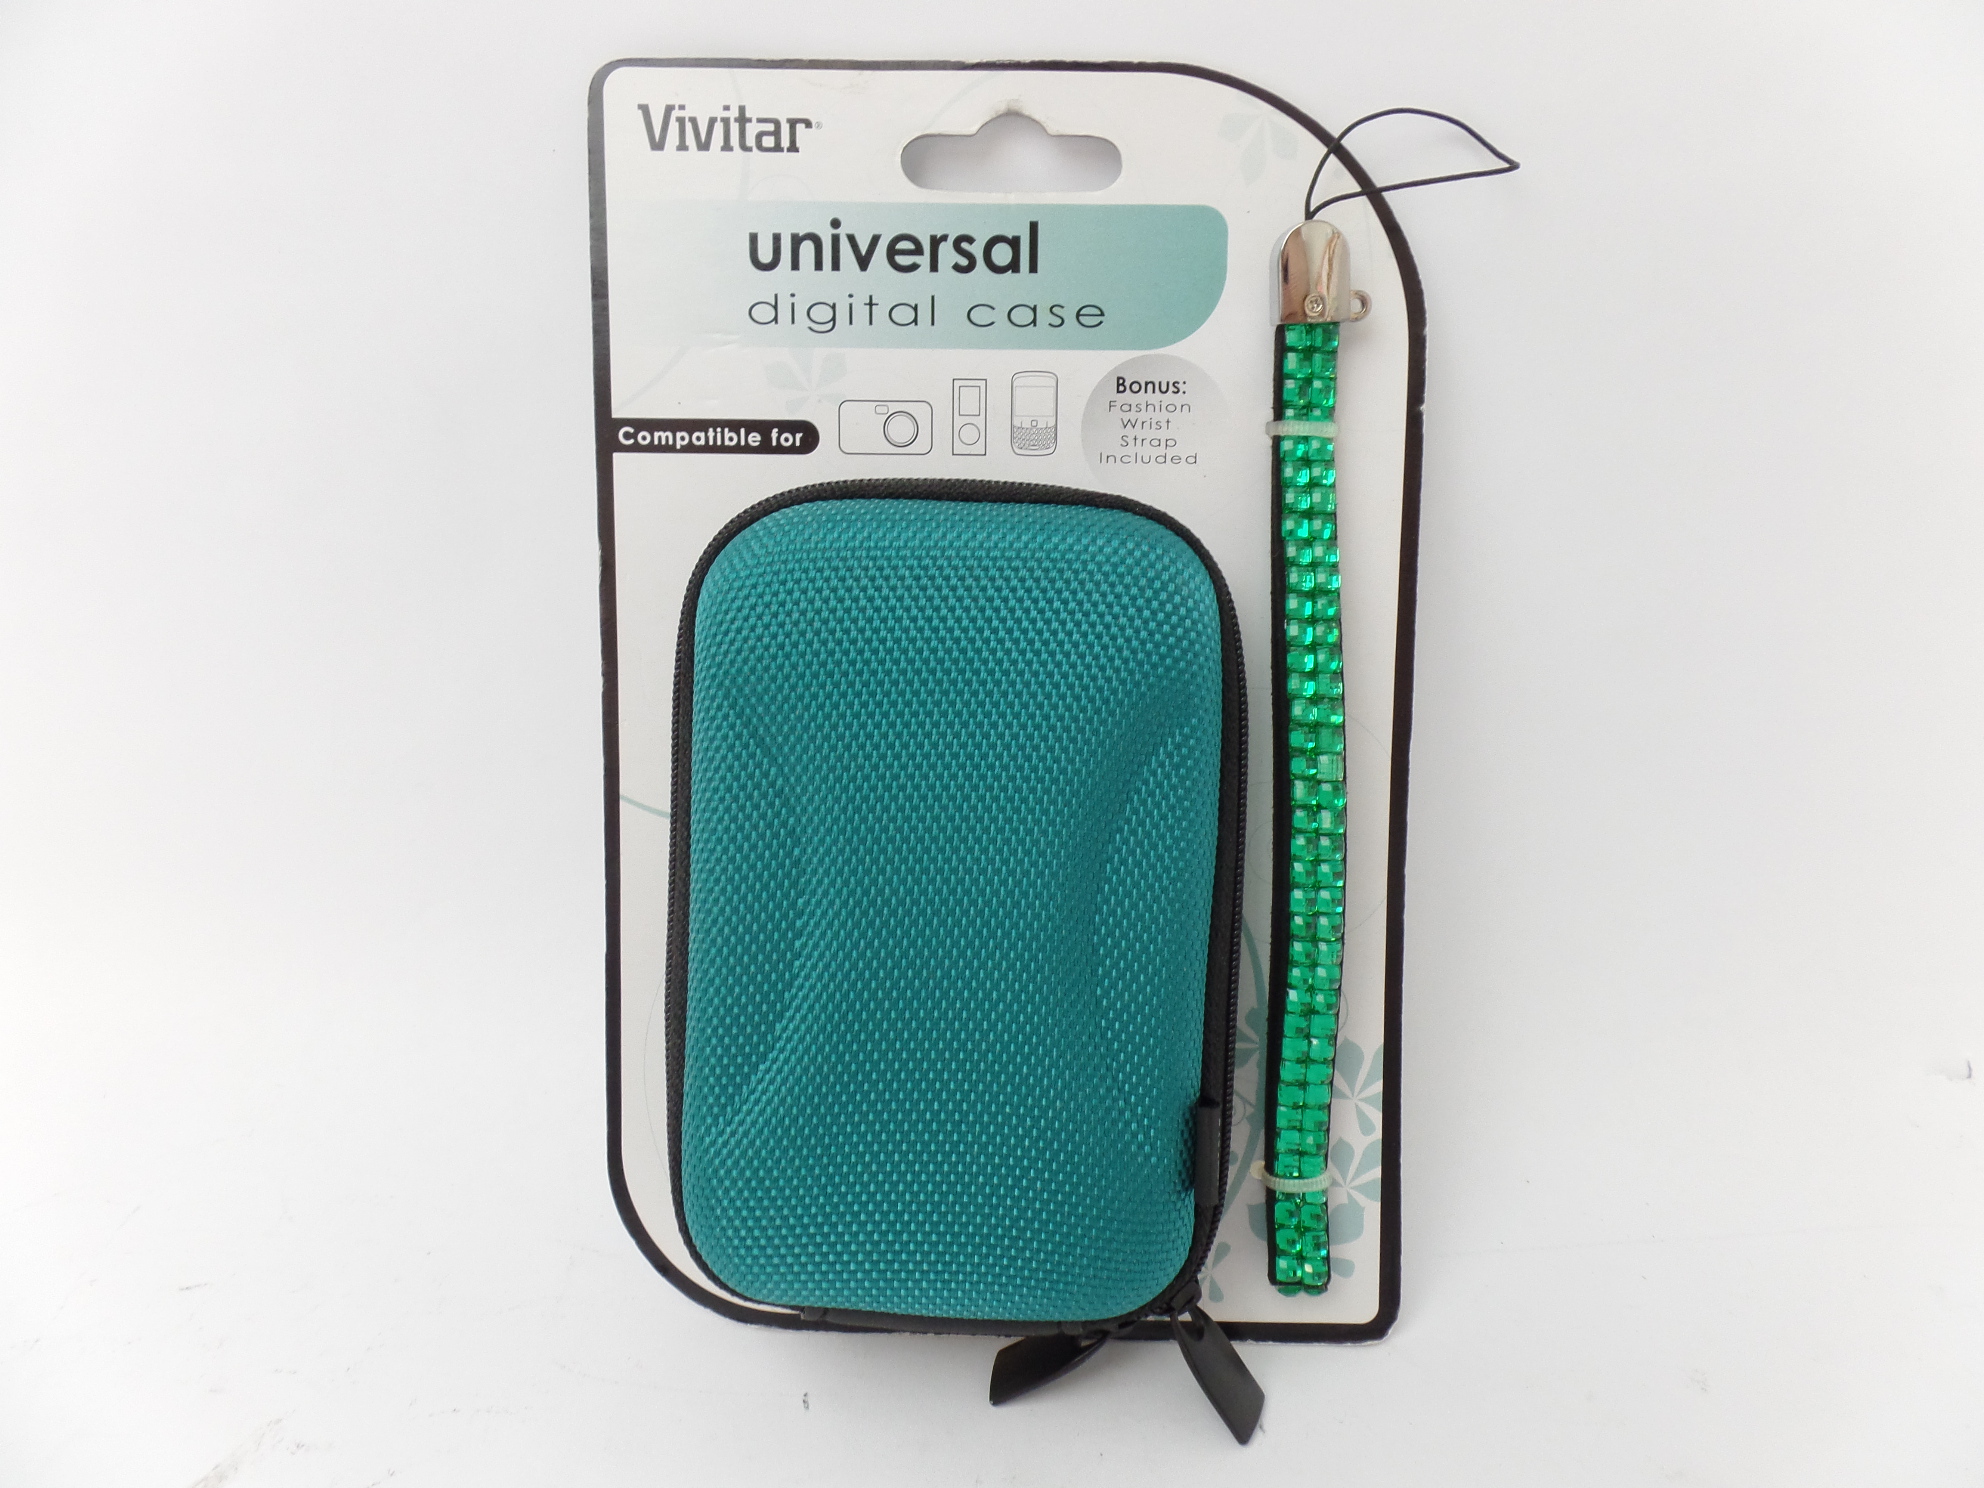 Vivitar Universal Hard Case for Digital Camera MP3 MP4 Player iPod w Wrist Strap - image 1 of 3